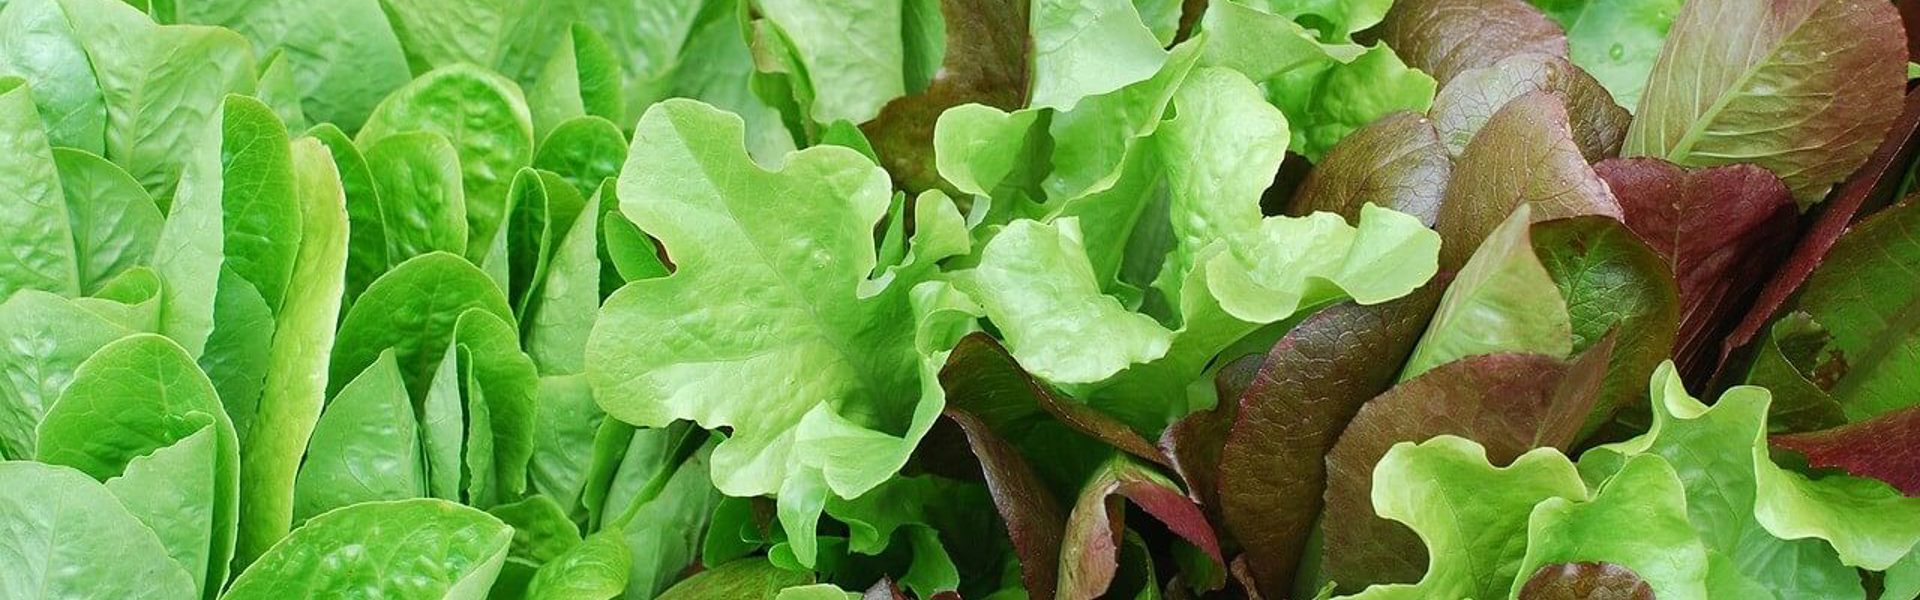 A close up of fresh green homegrown salad